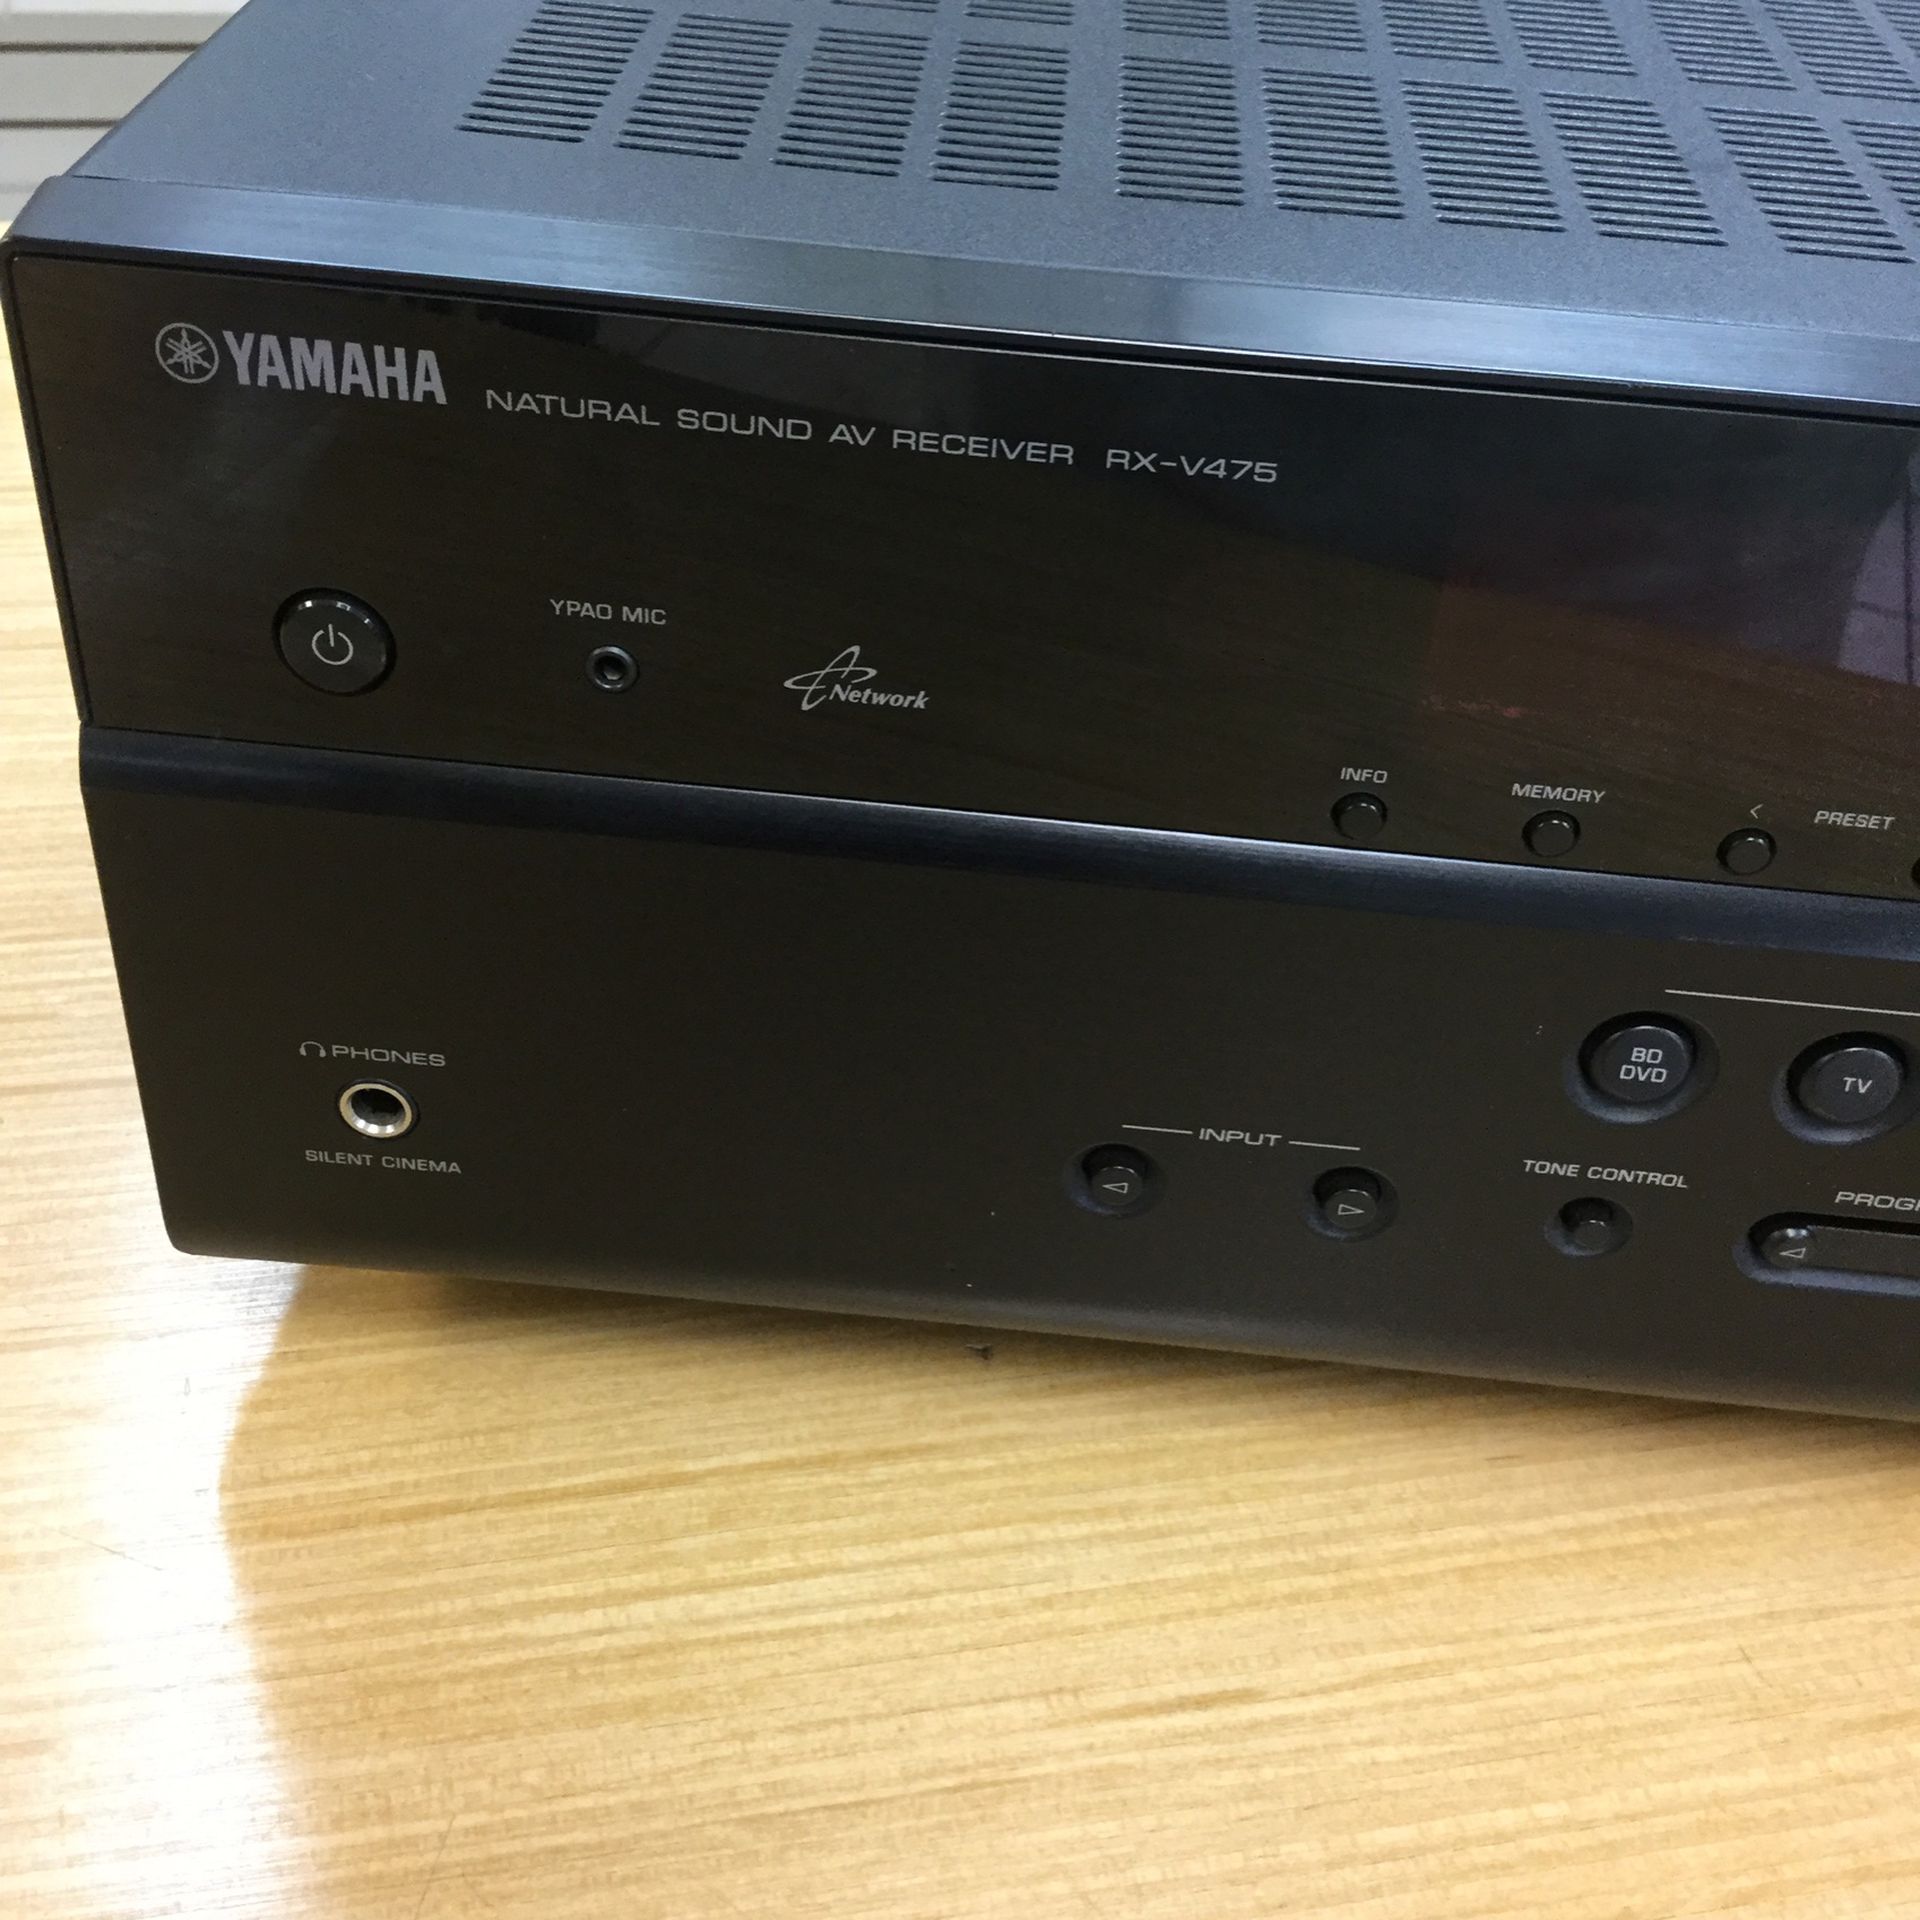 Yamaha RX-V475 HDMI Natural Sound AV Receiver Excellent Condition